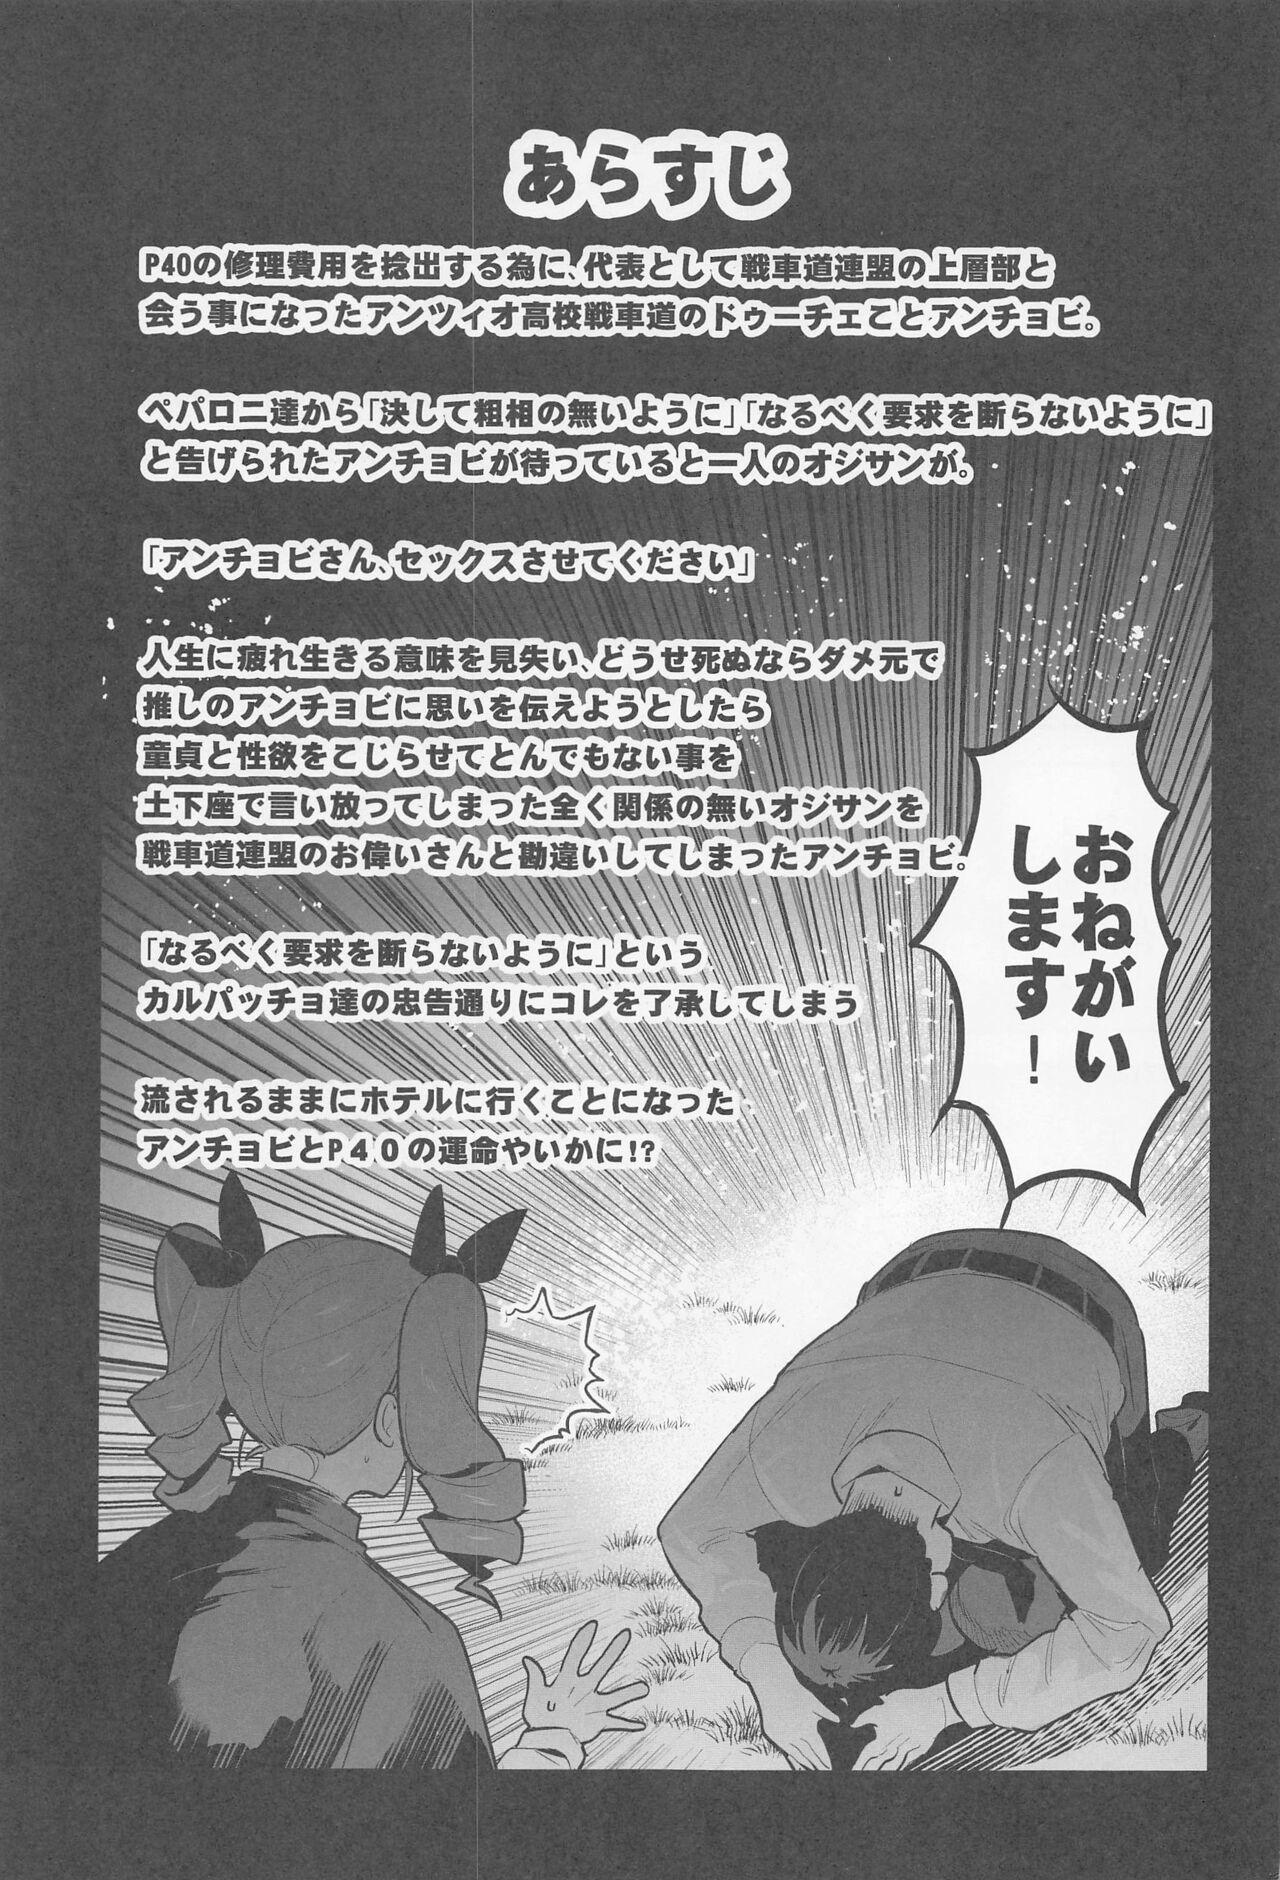 Play anchobi dogezadeonegaishitaraippatsuyarasetekuremashita - Girls und panzer Soft - Page 2